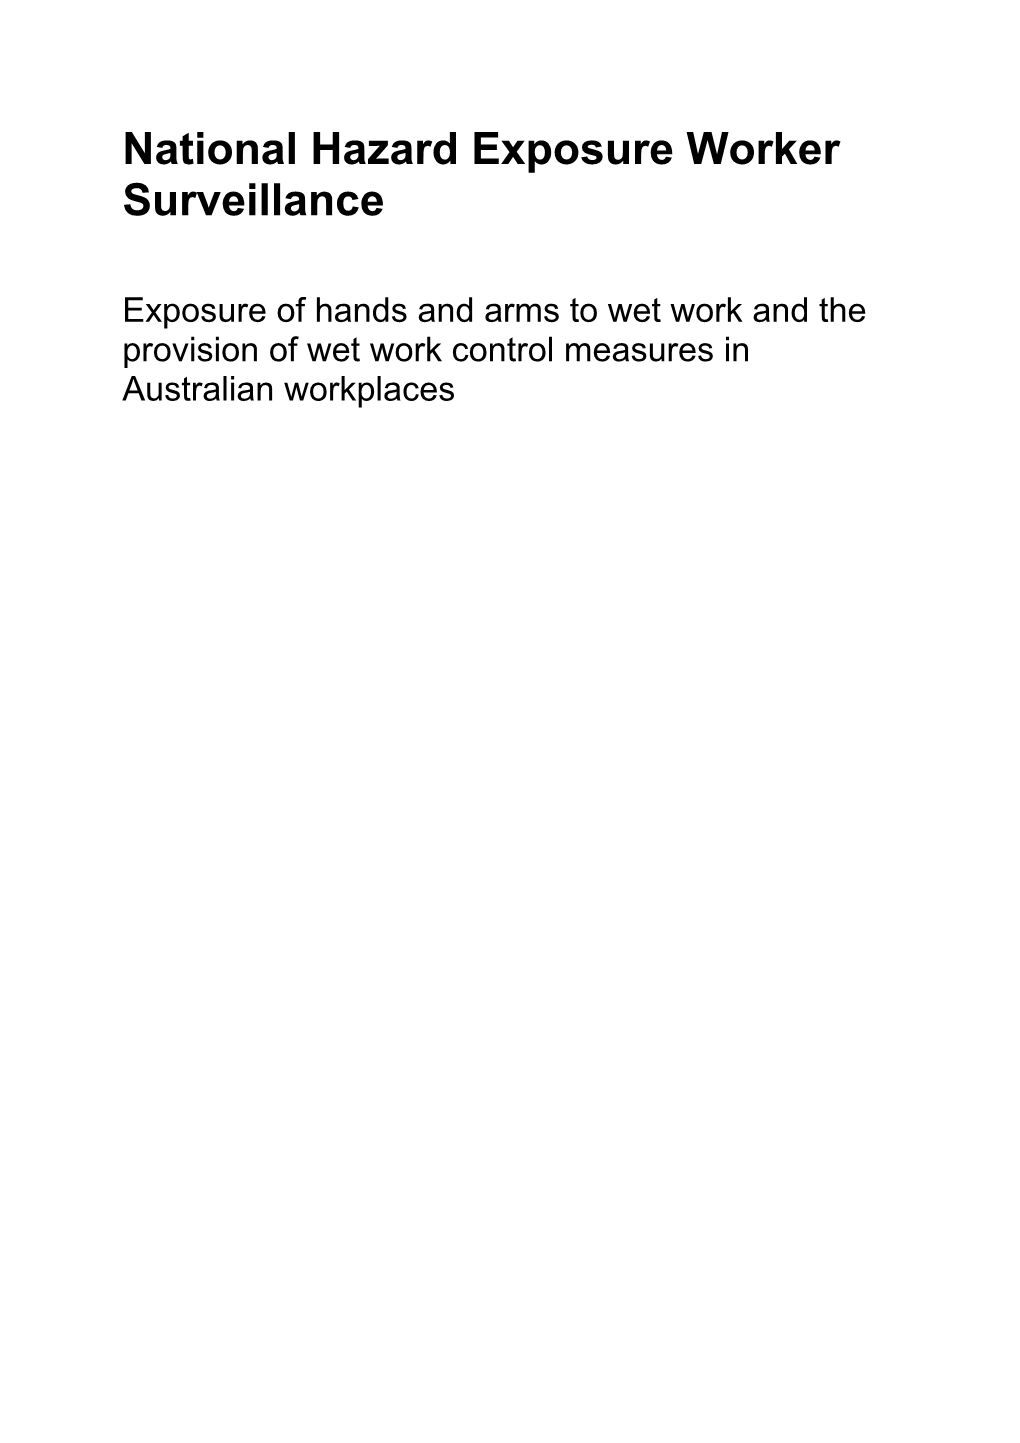 National Hazard Exposure Worker Surveillance: Wet Work Exposure and the Provision of Wet